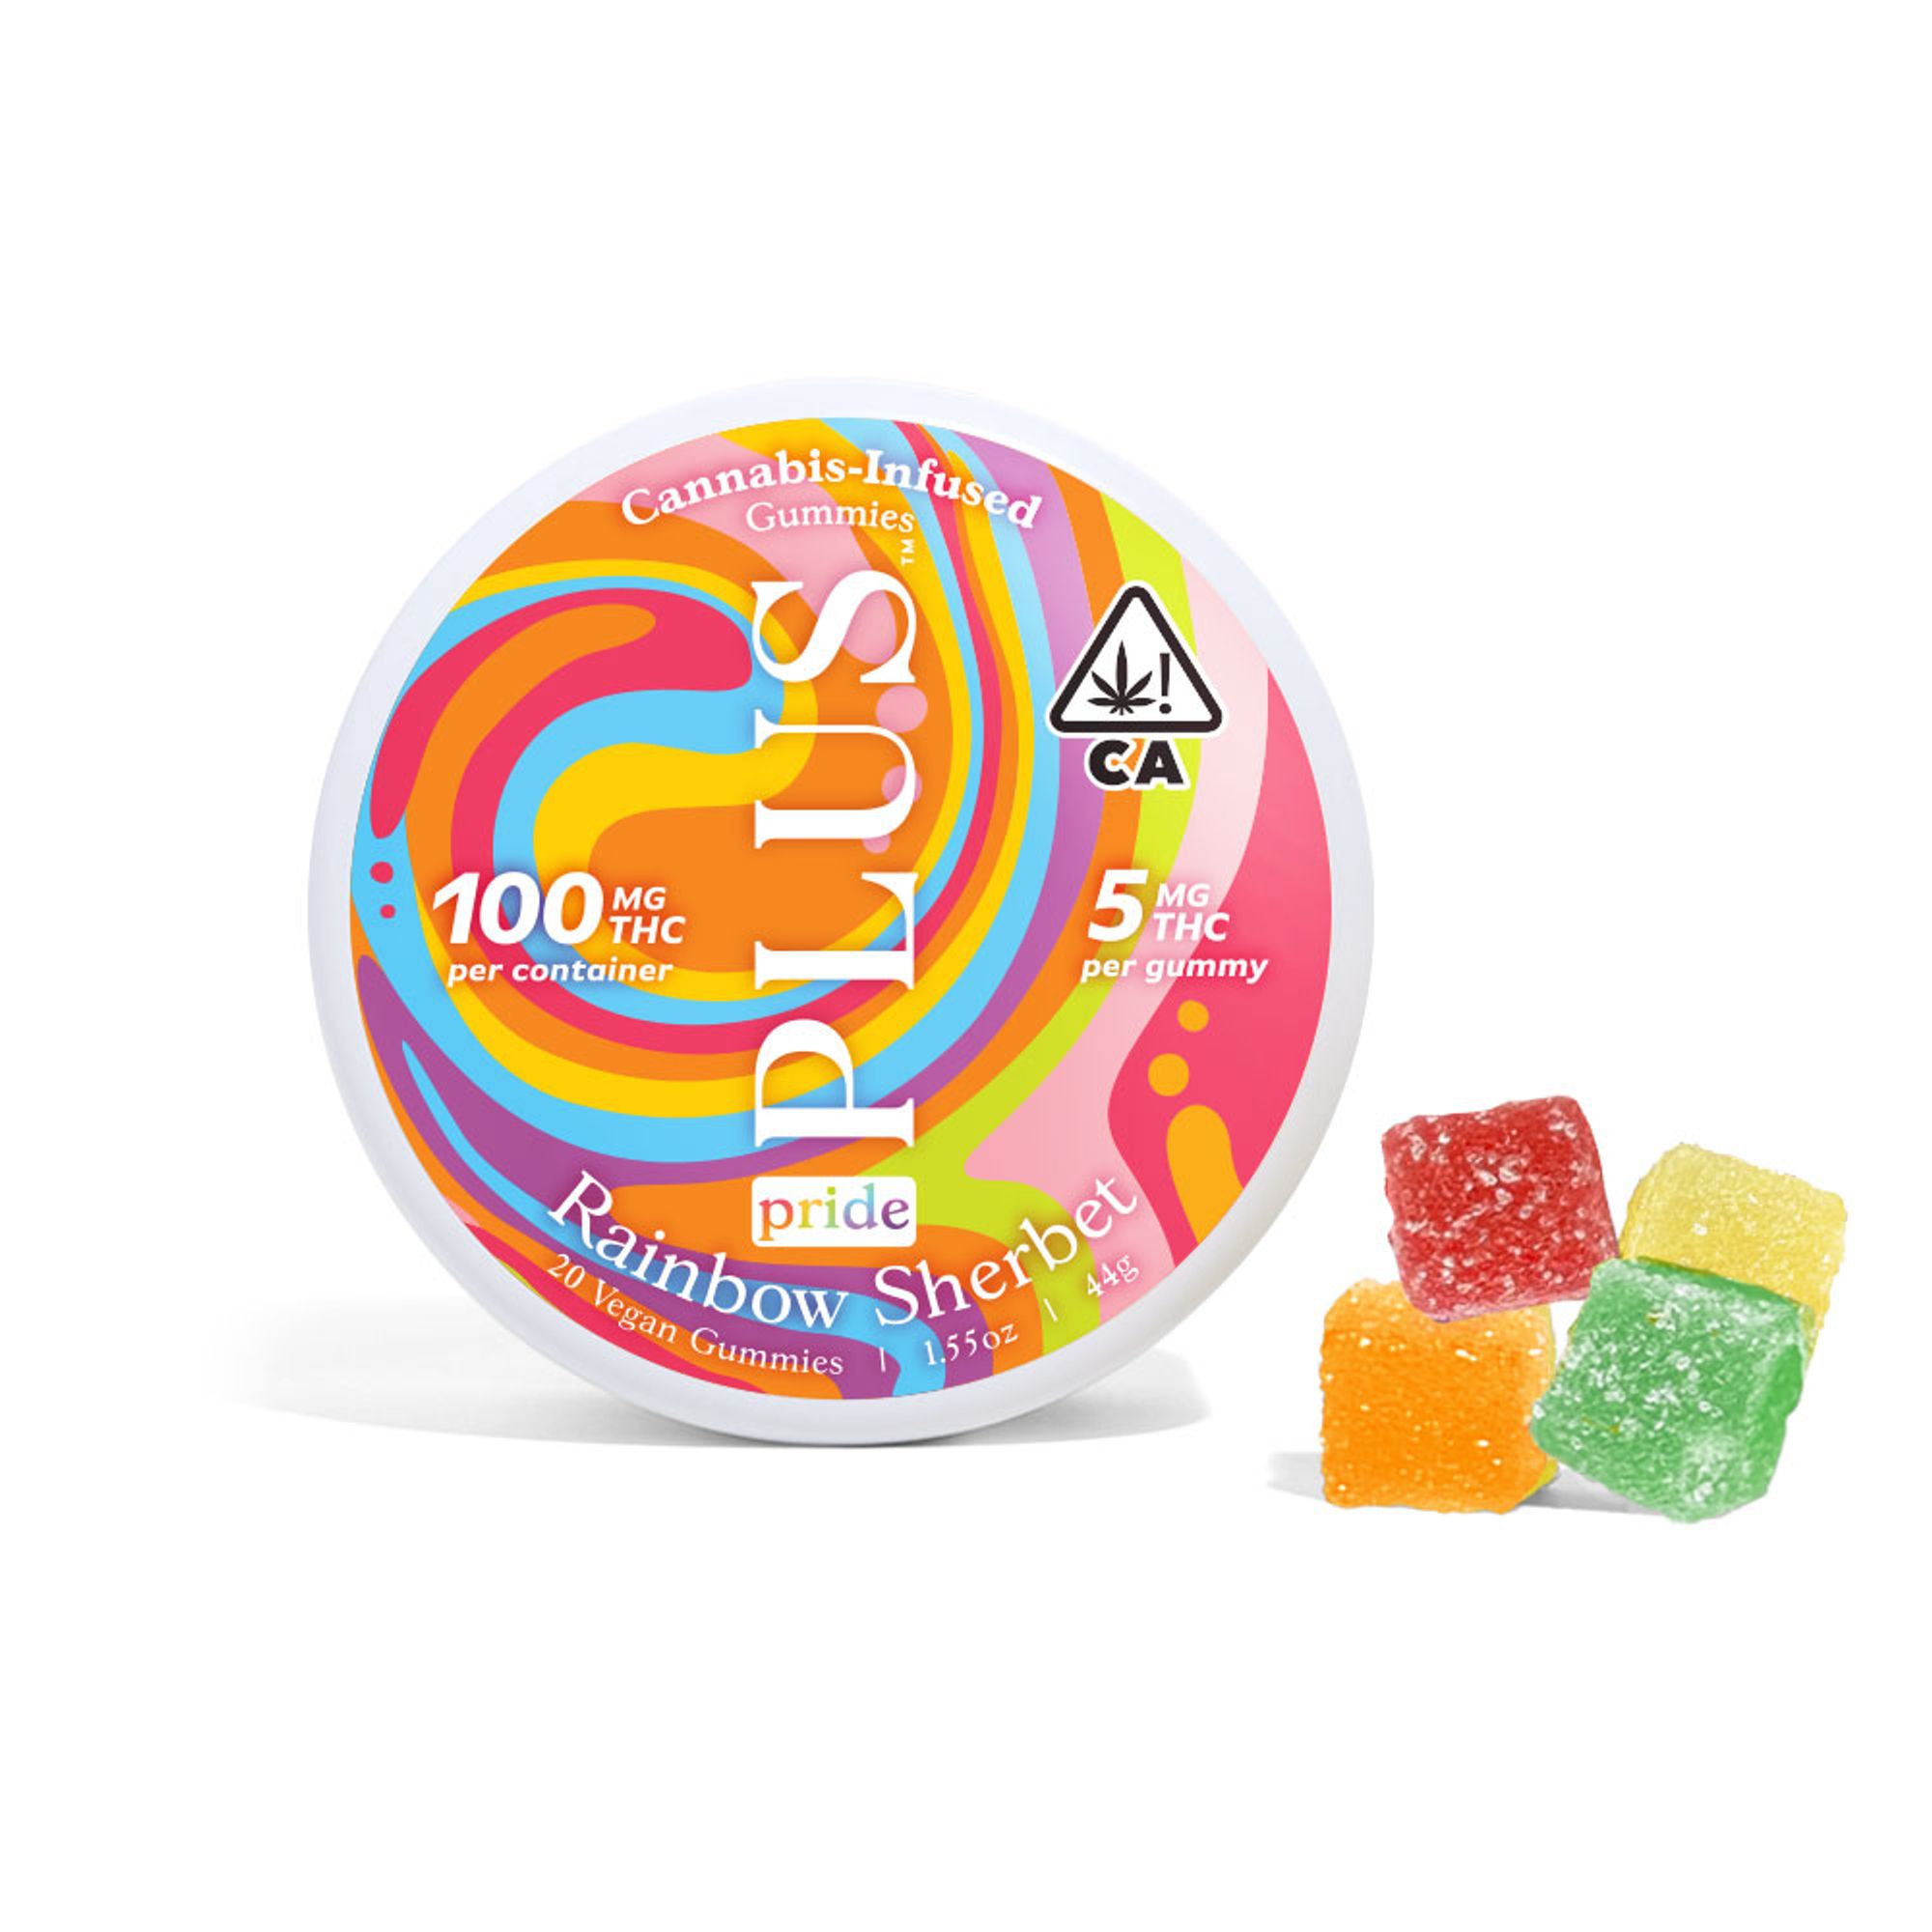 PRIDE Rainbow Sherbet Gummies (Limited Edition)